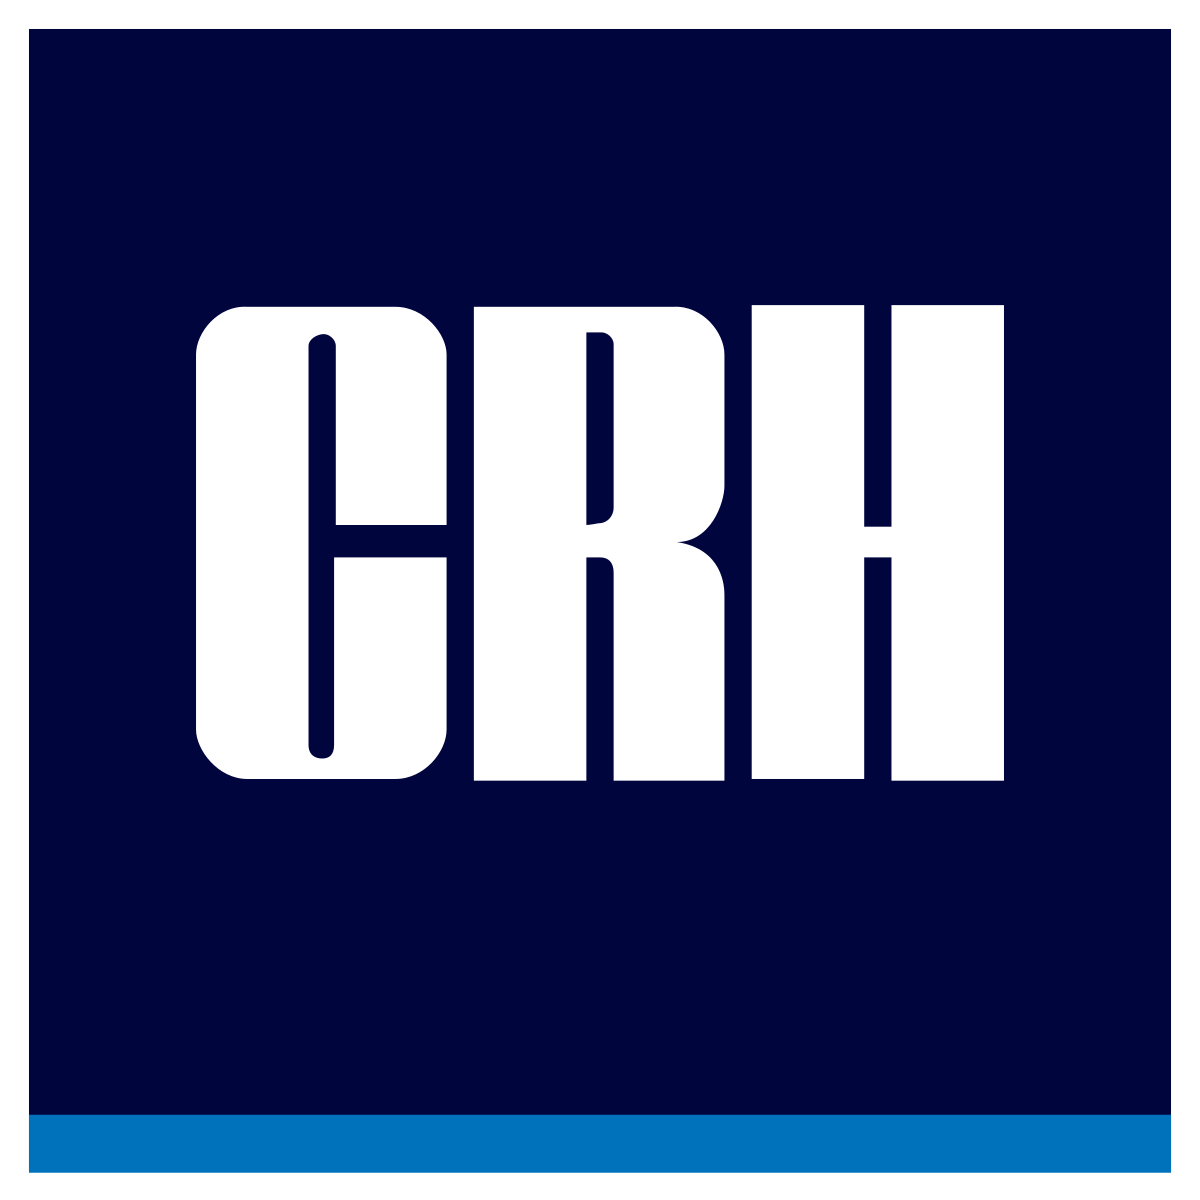 CRH PLC Brand Logo